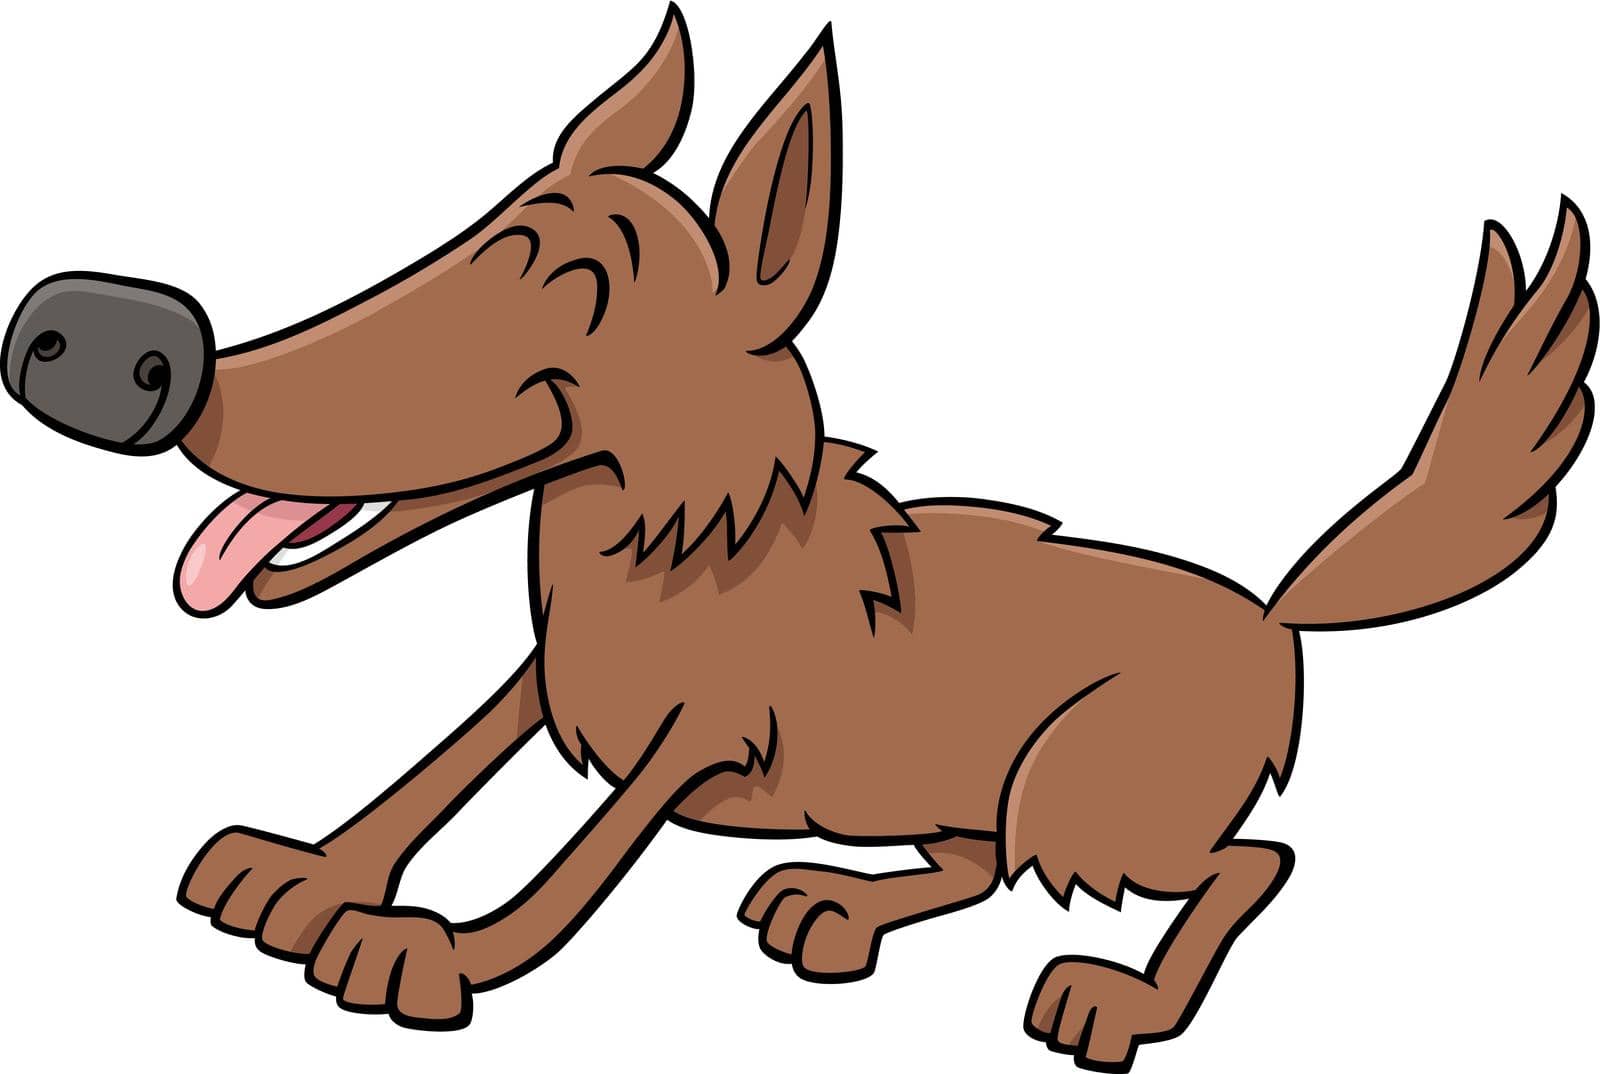 Cartoon illustration of funny playful brown dog comic animal character